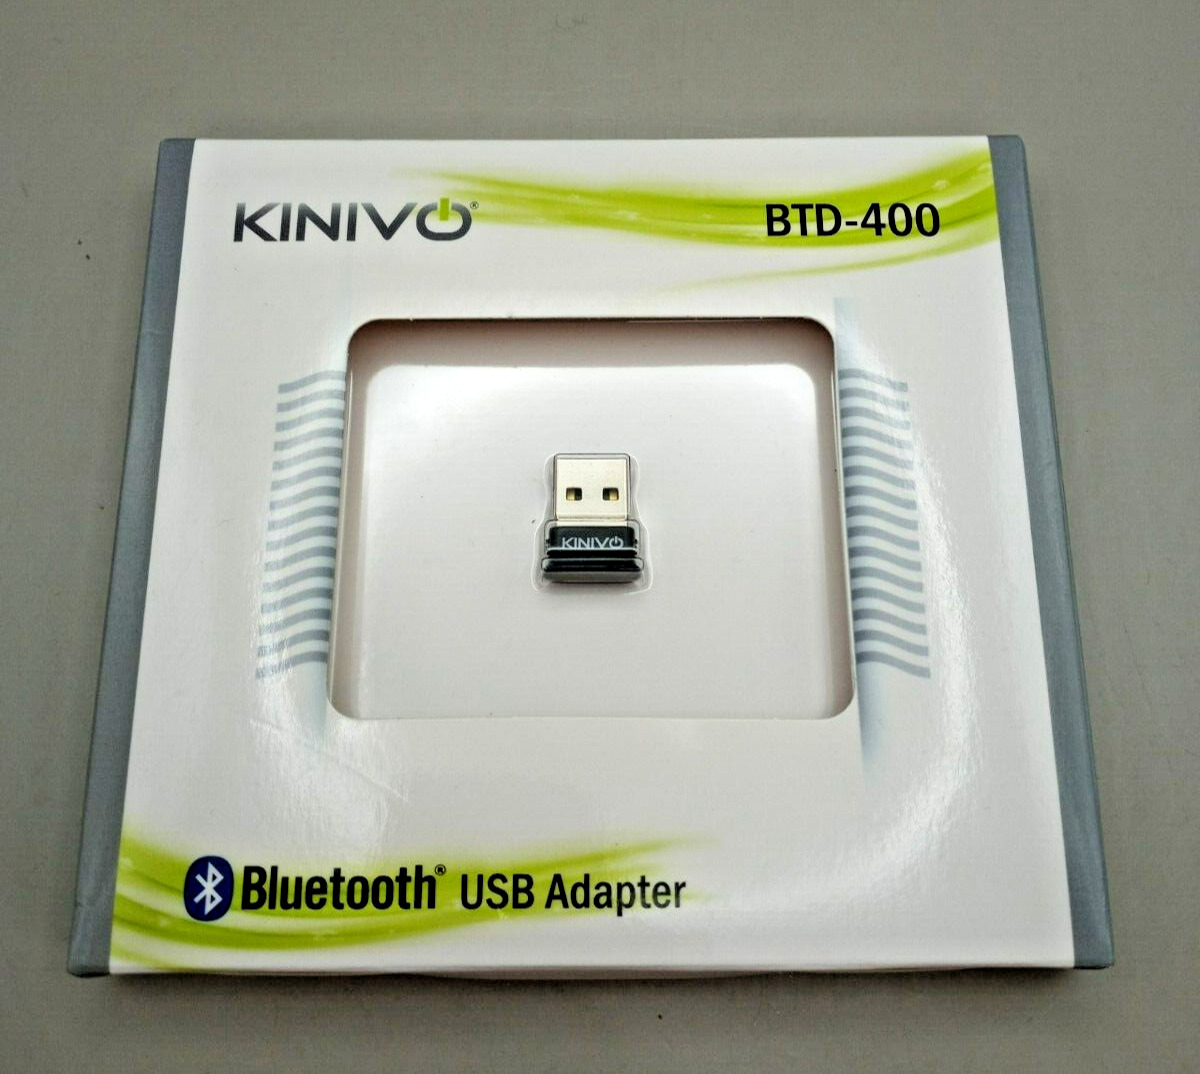 NEW Kinivo BTD-400 Bluetooth USB Adapter for PC- Windows XP, Vista, 7 & 8